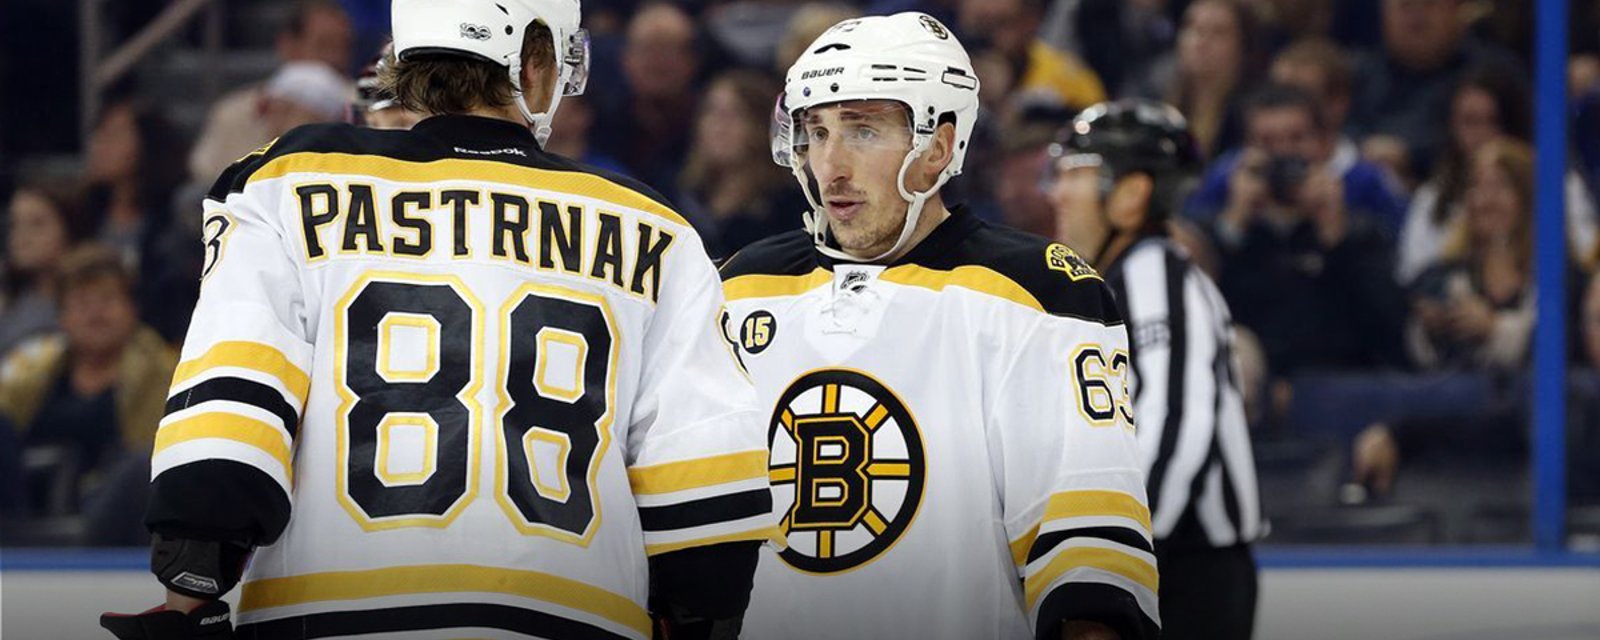 Report: Bruins’ Marchand weighs in on Pastrnak negotiations